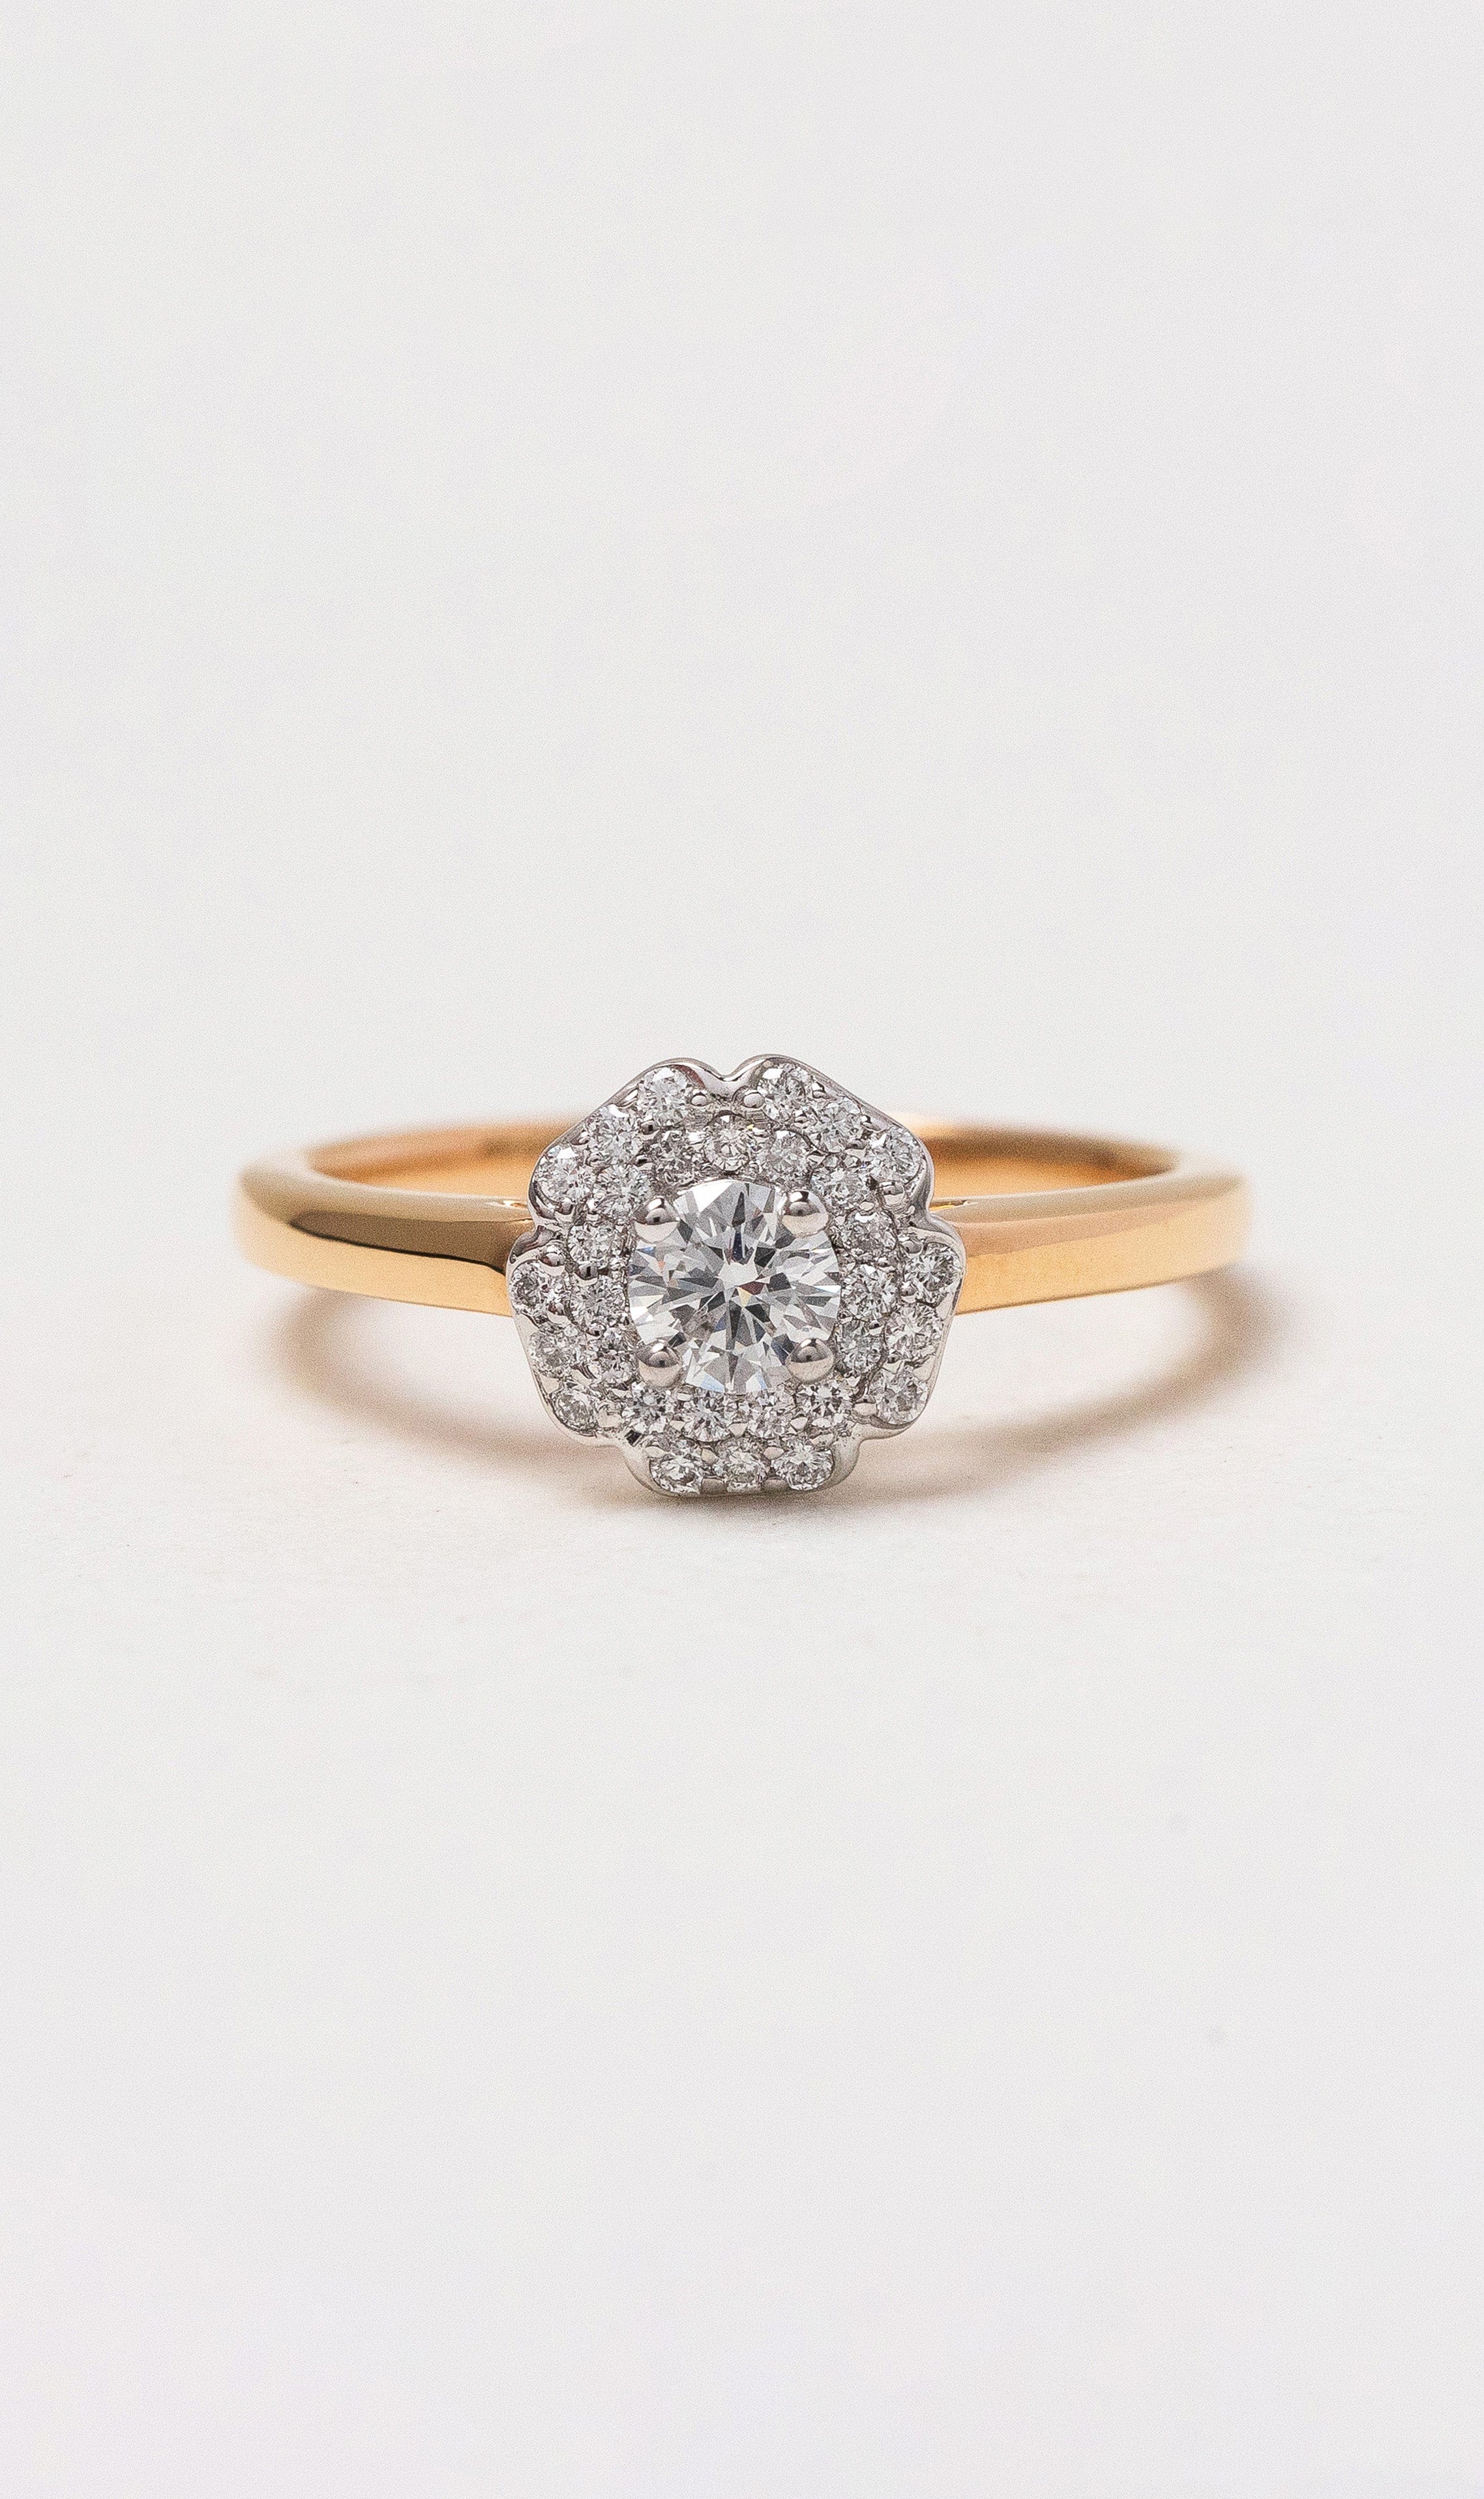 Hogans Family Jewellers 18K RG Floral Halo Diamond Ring